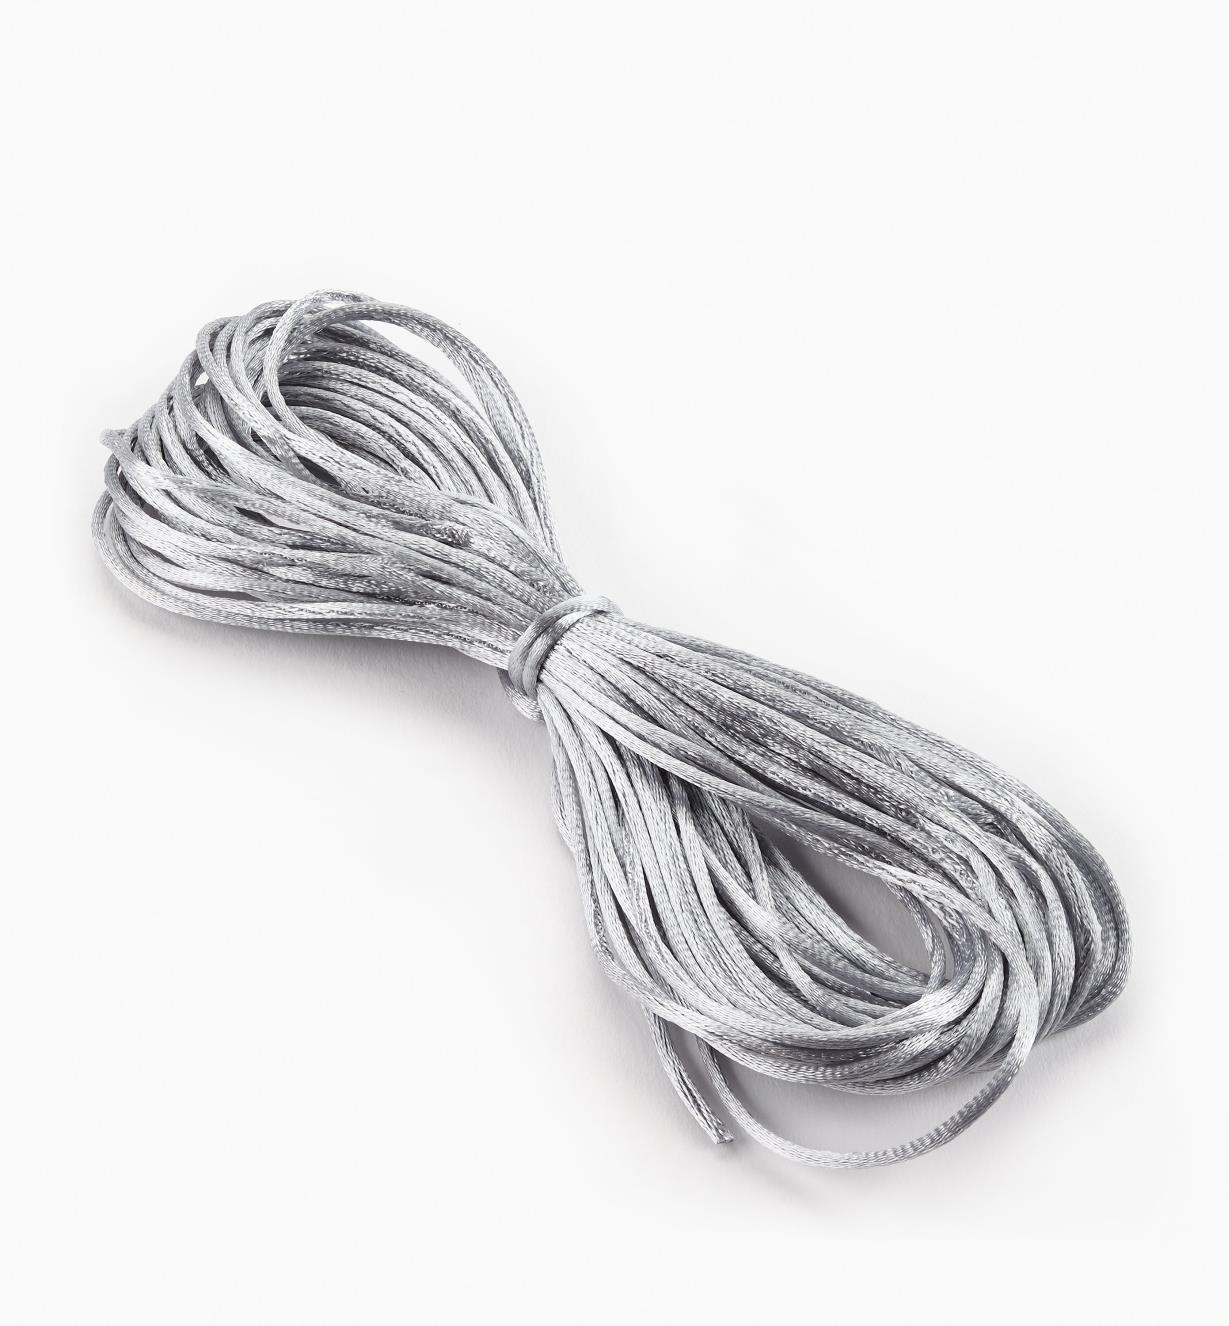 09A0704 - Silver Rattail Cord